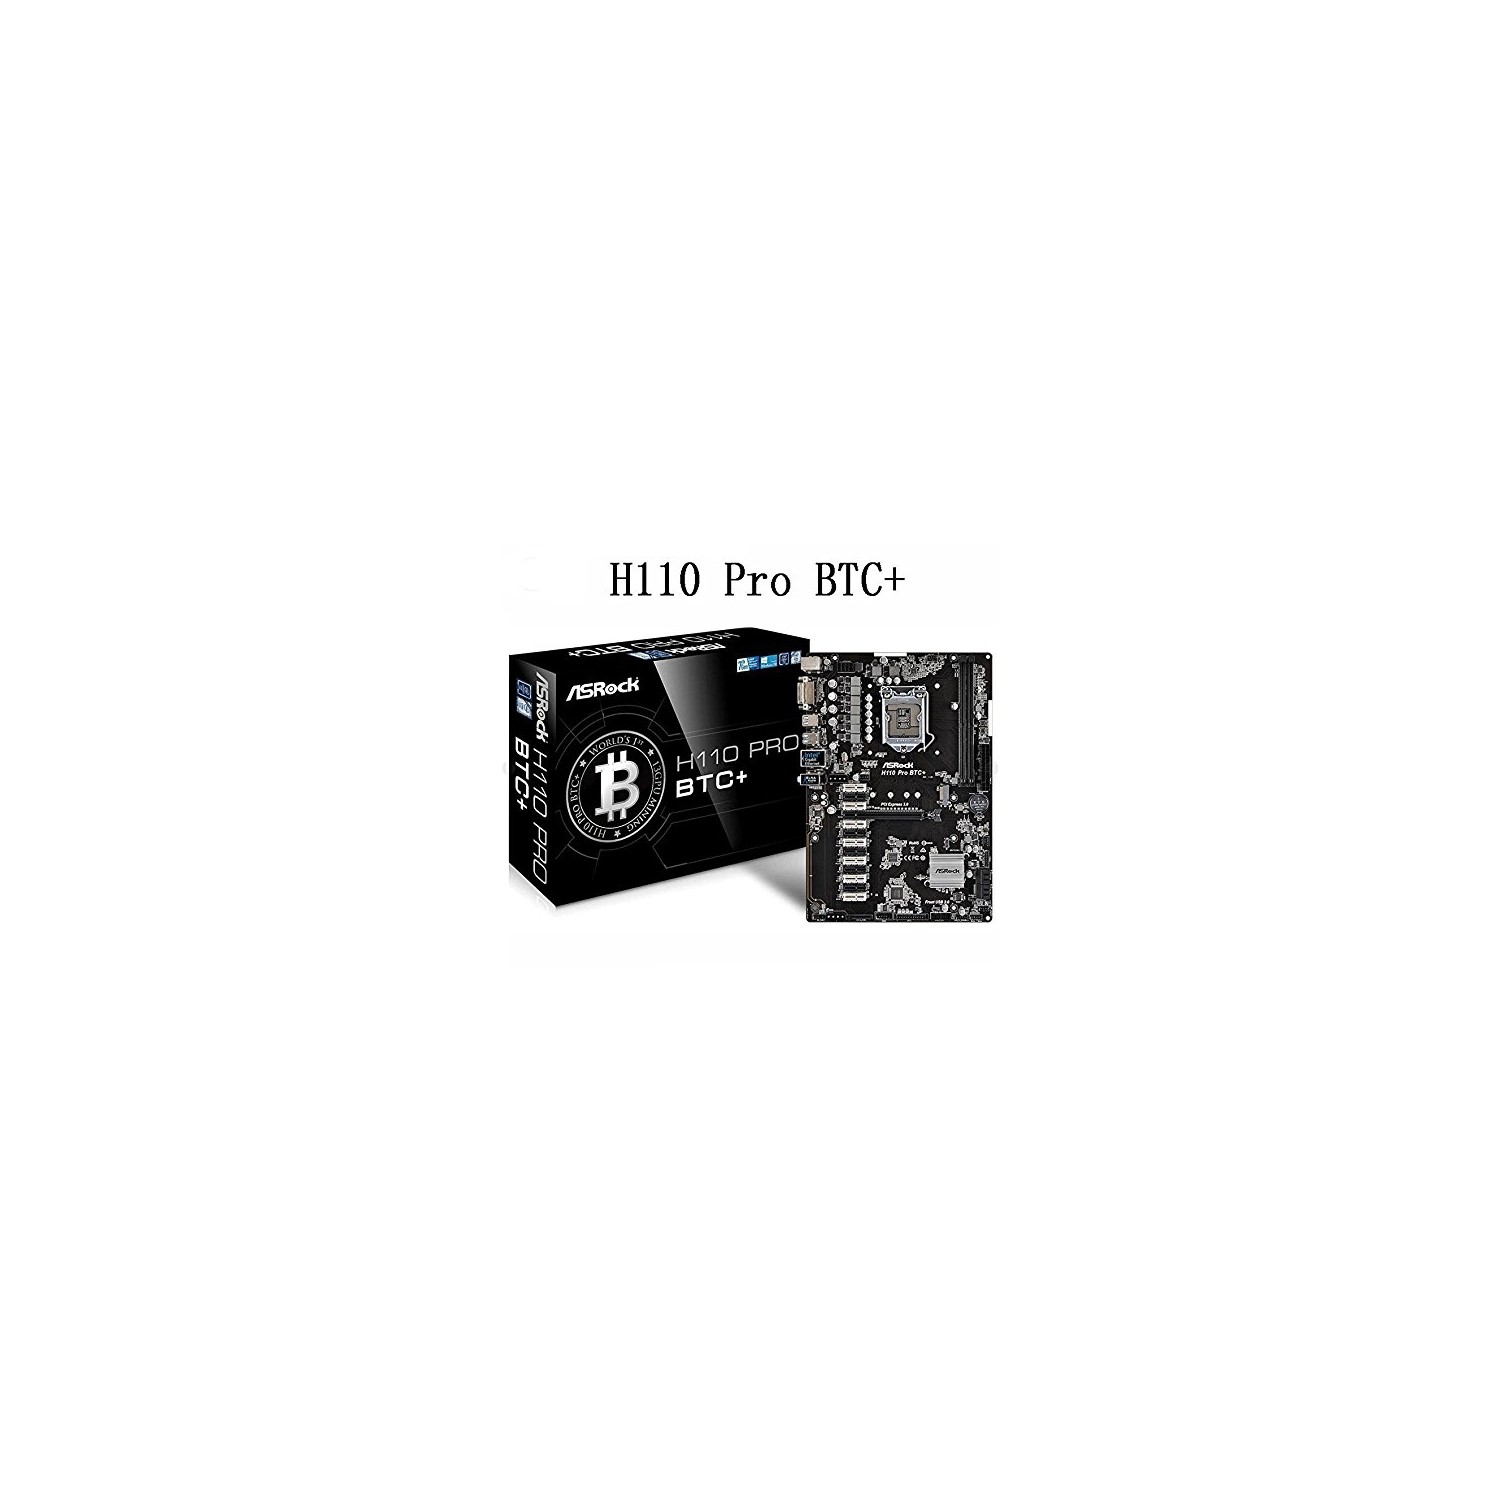 ASROCK H110 PRO BTC+H110 BITCOIN MINING BOARD SUPPORT 13 GRAPHICS CARD LGA1151 DDR4 MINER MACHINE MOTHERBOARD (H110)